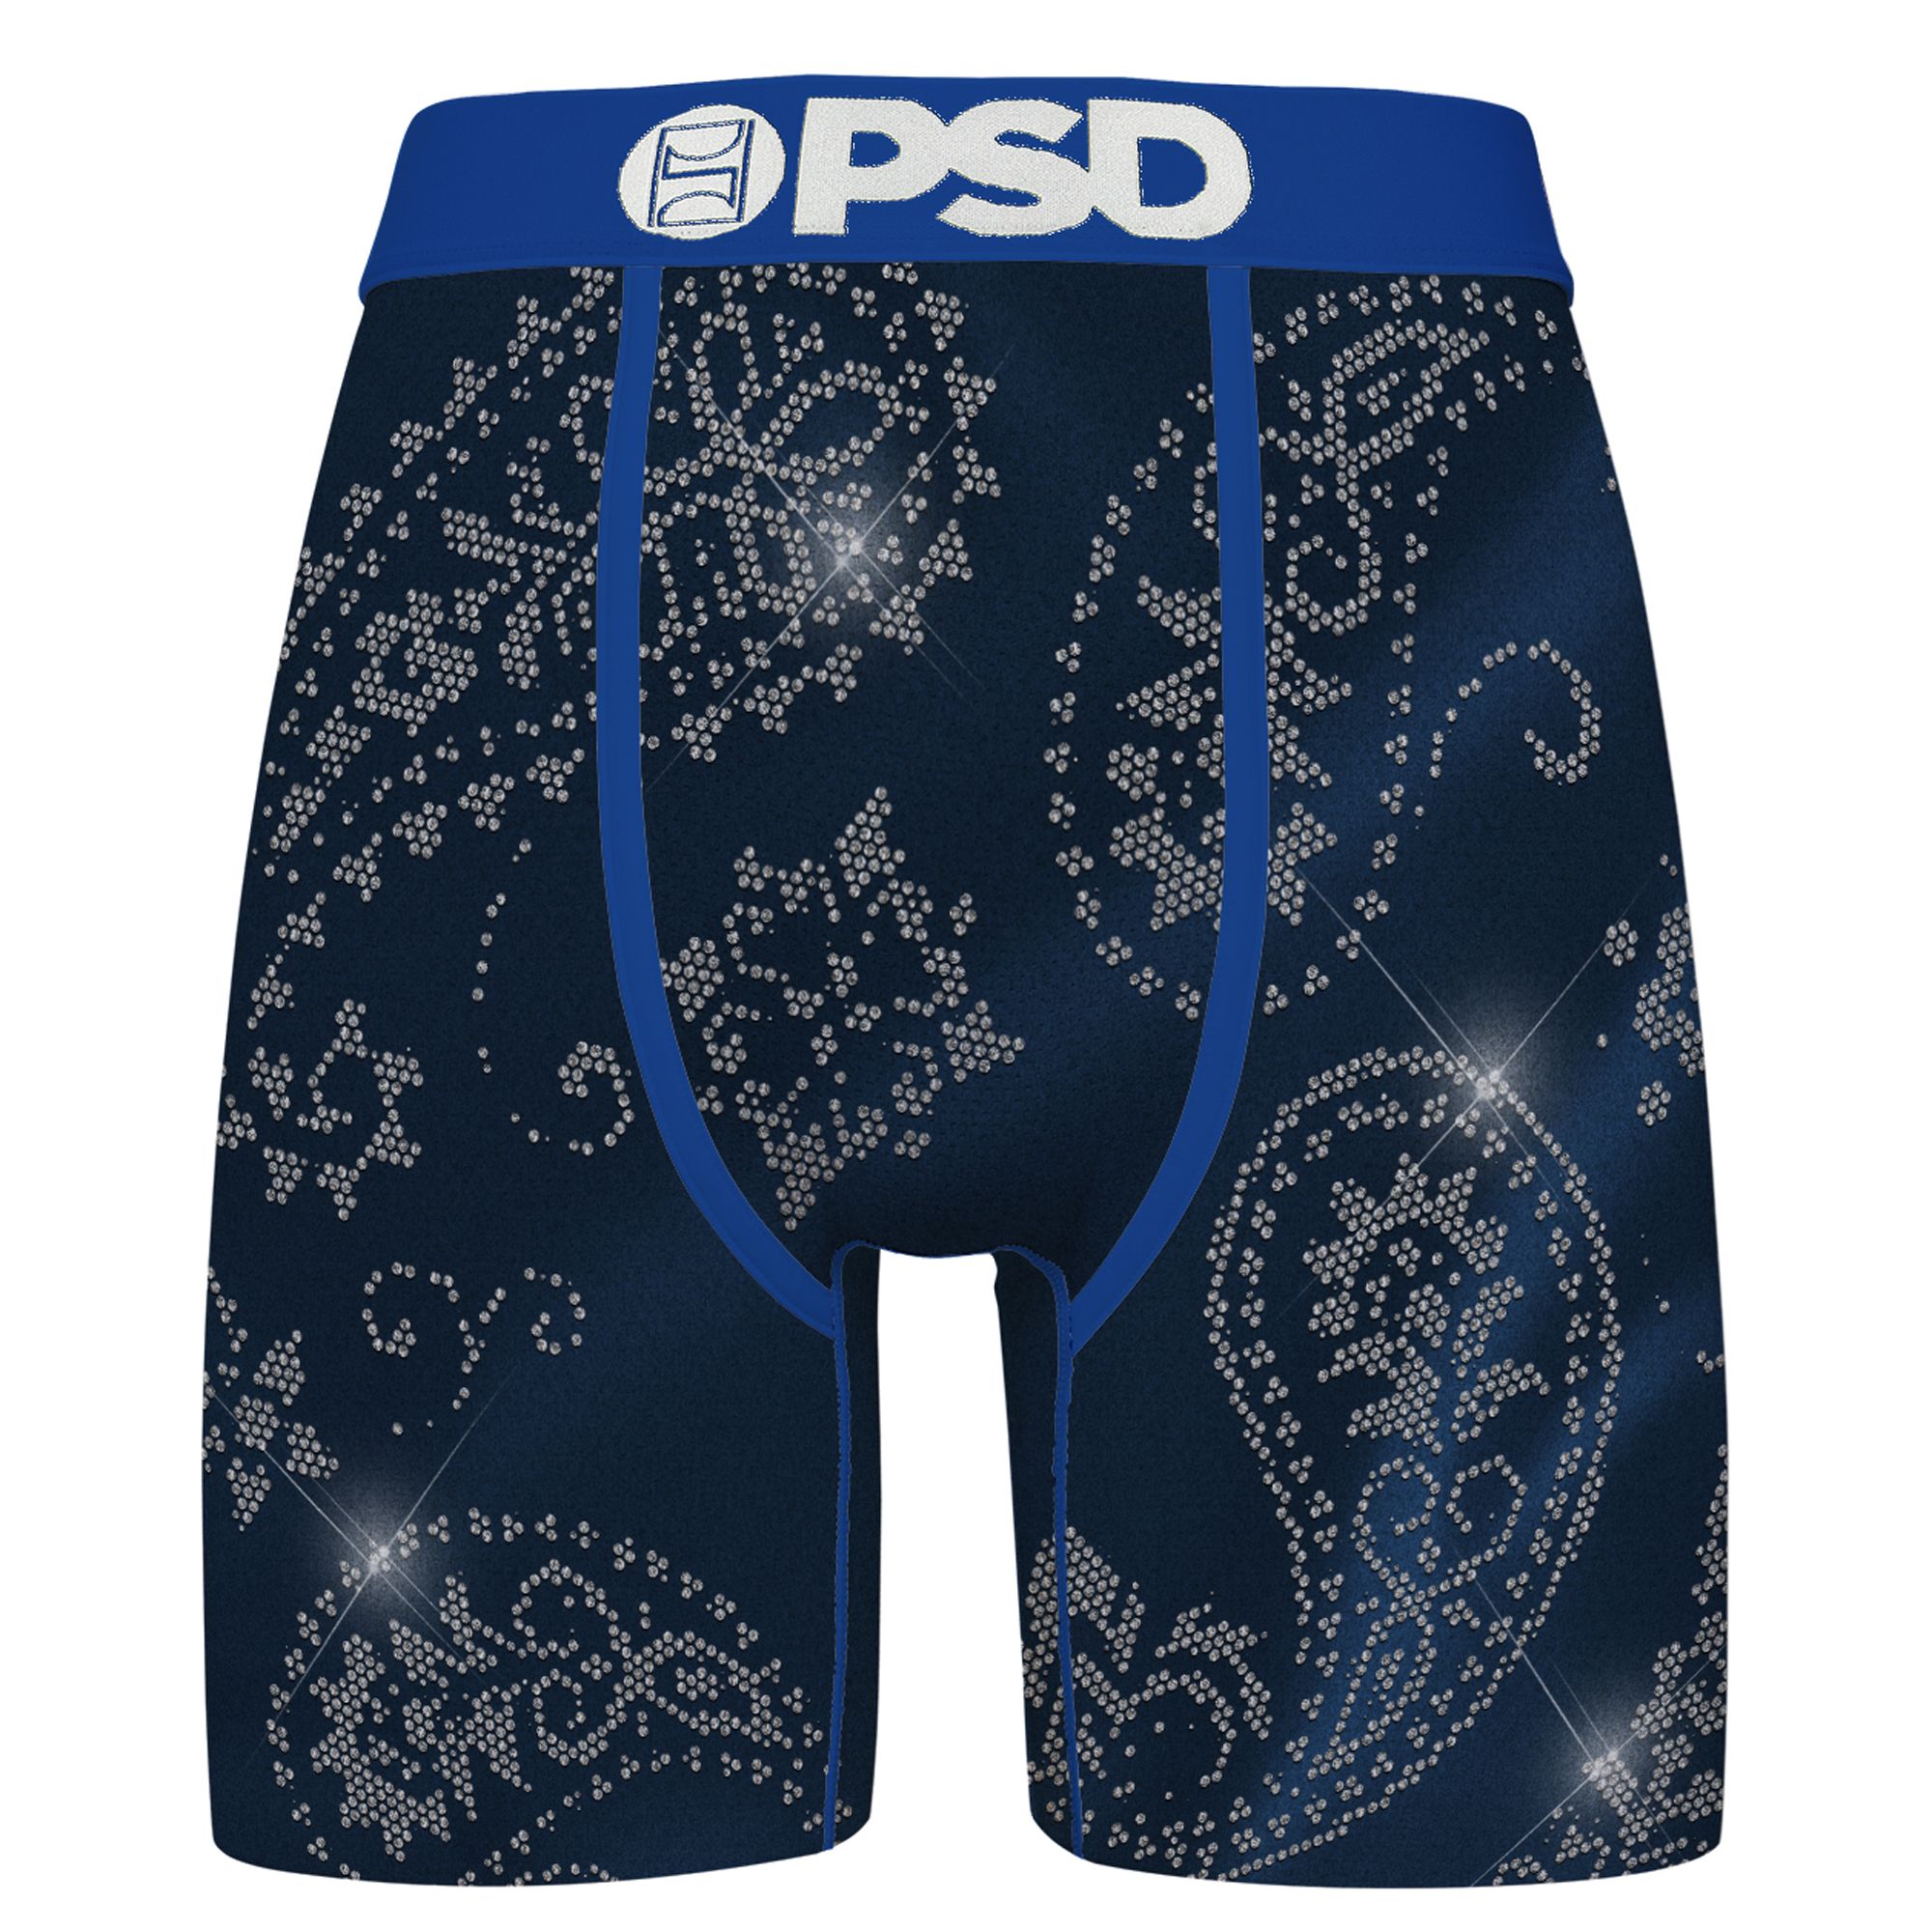 PSD Bandana Roses Sports Bra Women's Top Underwear (Brand New